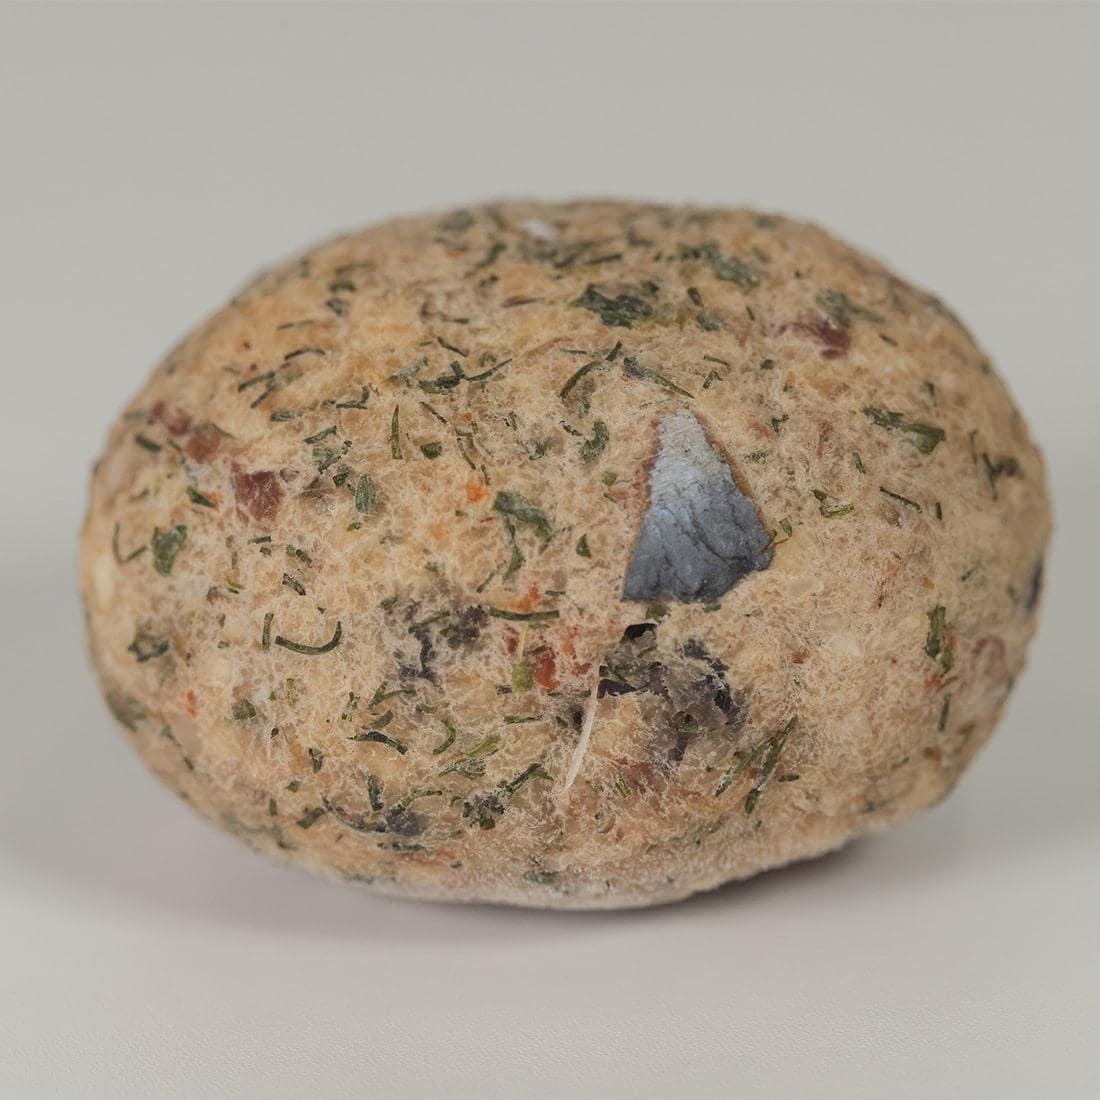 Image 1 of Sardine balls